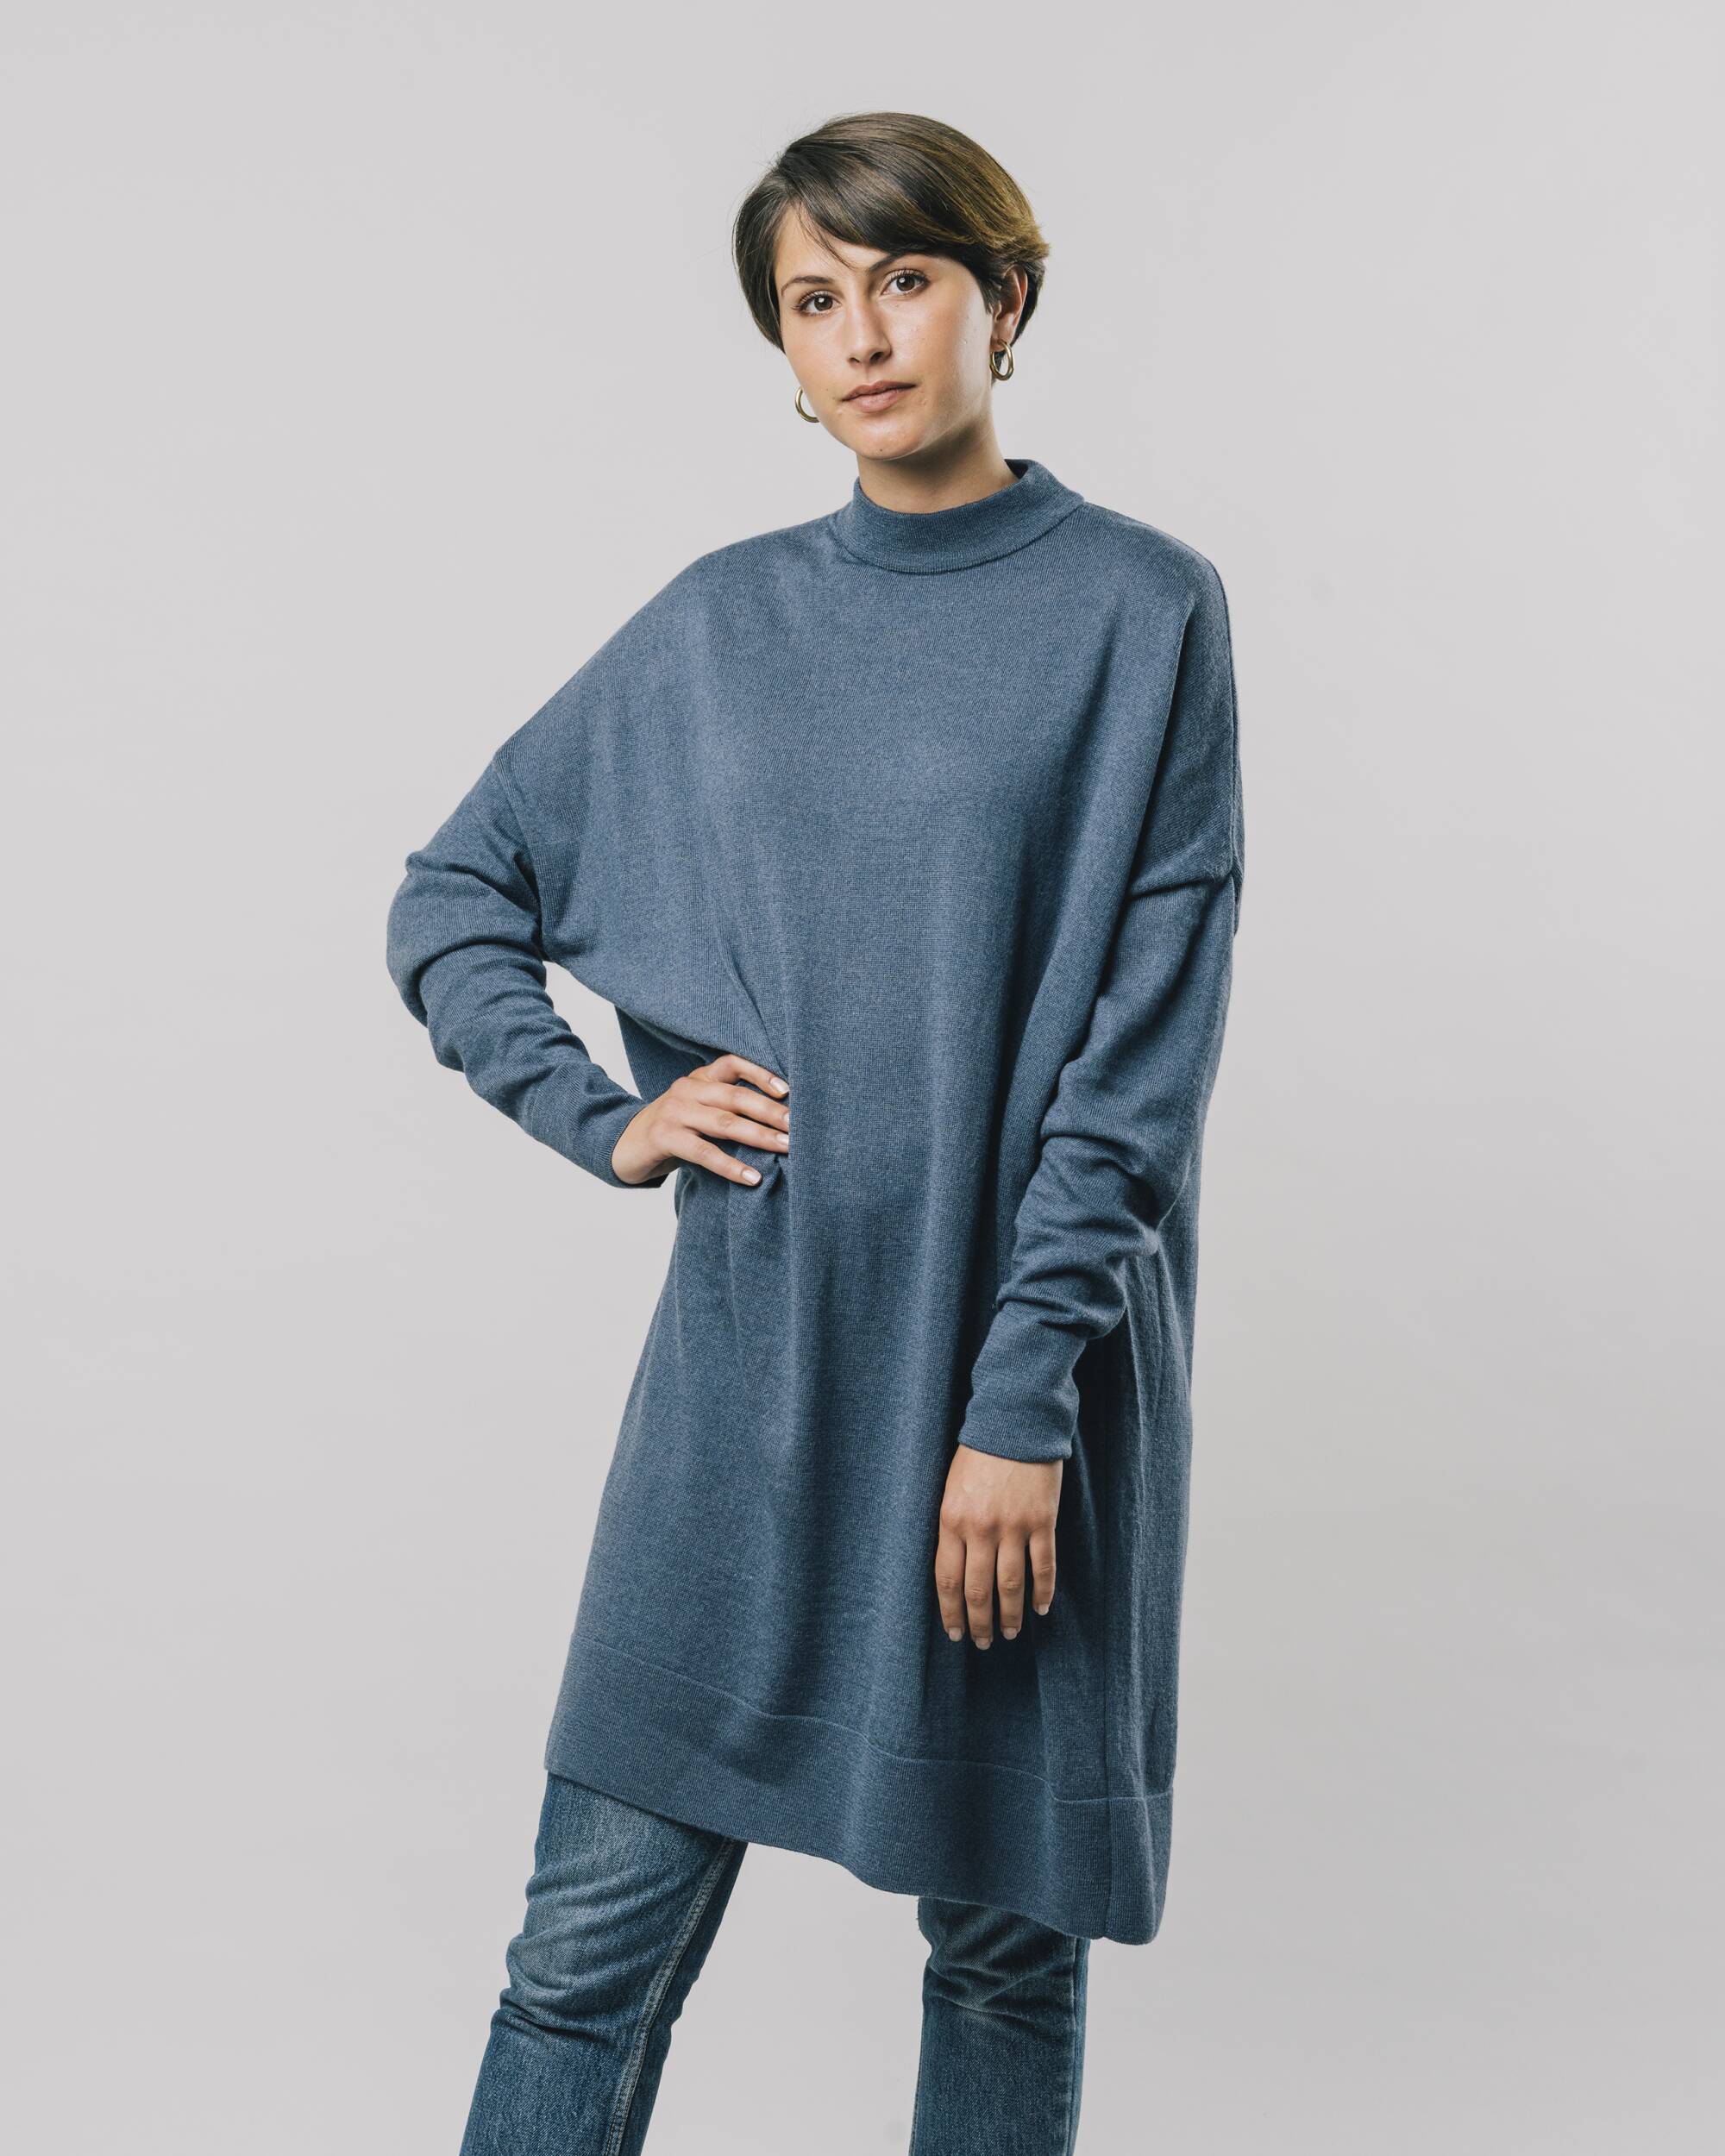 Sweater "Winter Day" in blue made from 100% organic merino wool from Brava Fabrics